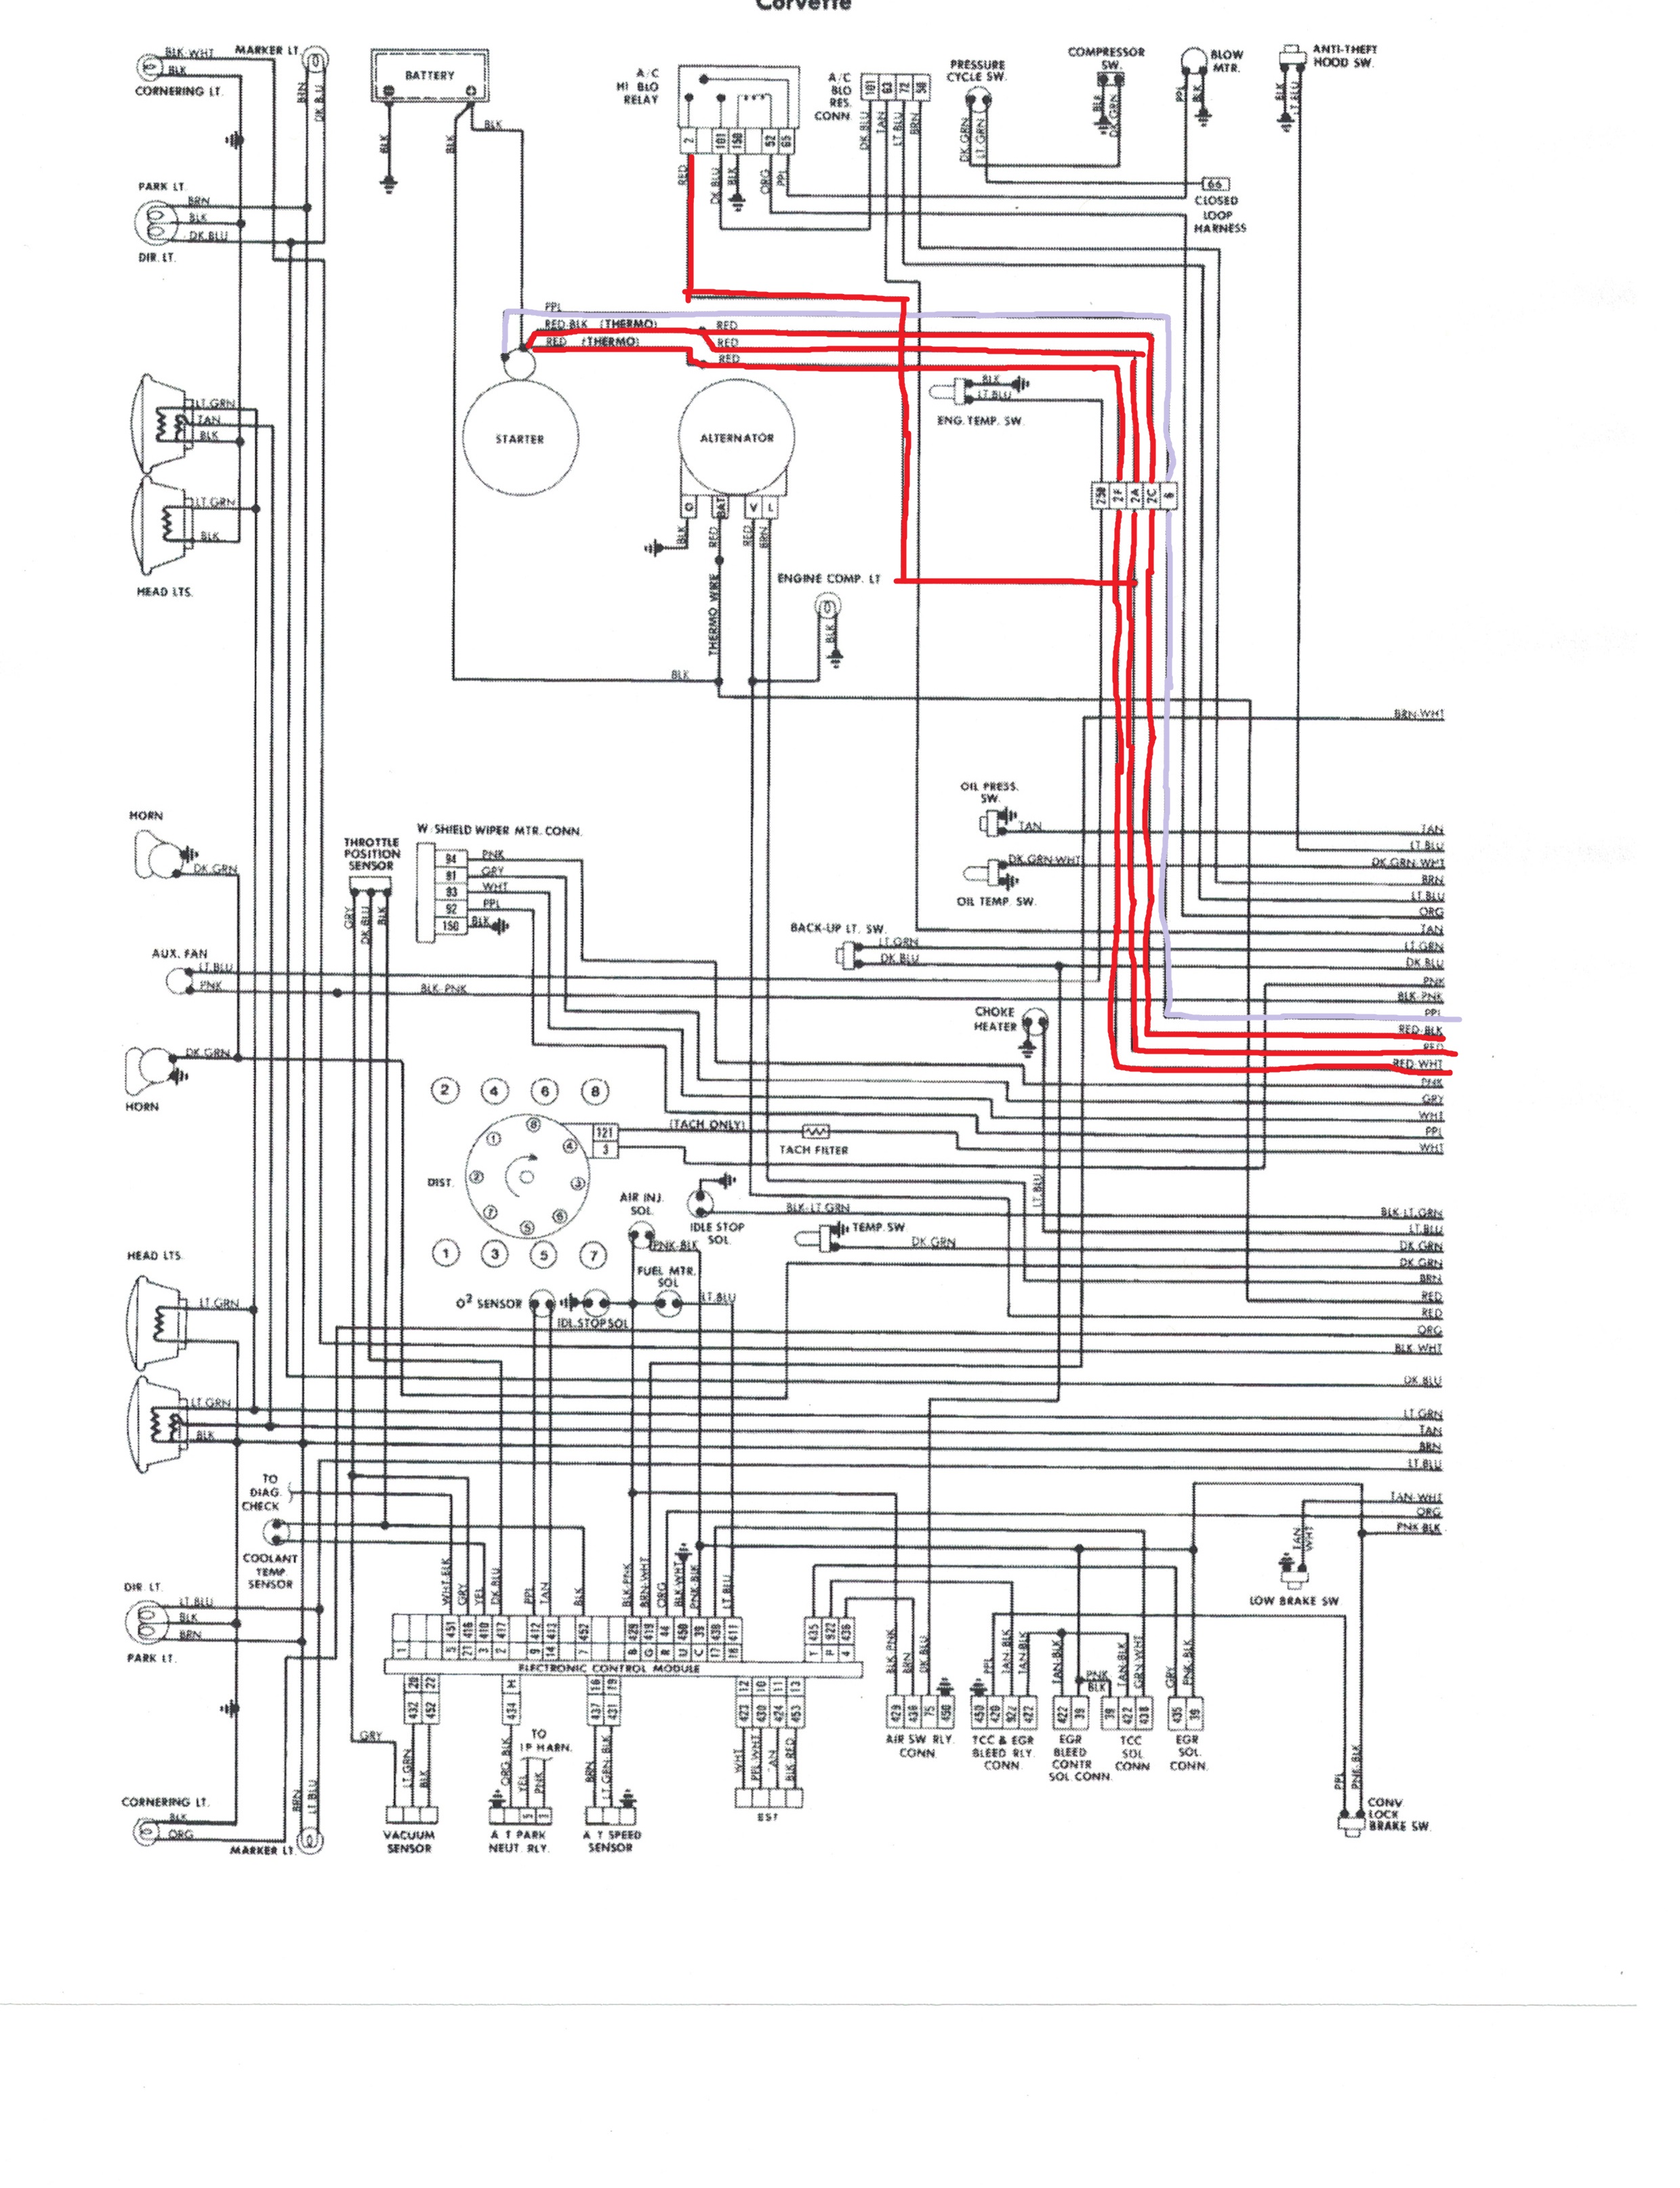 [DIAGRAM] Citroen C3 Wiring Diagrame D Uso FULL Version HD Quality D